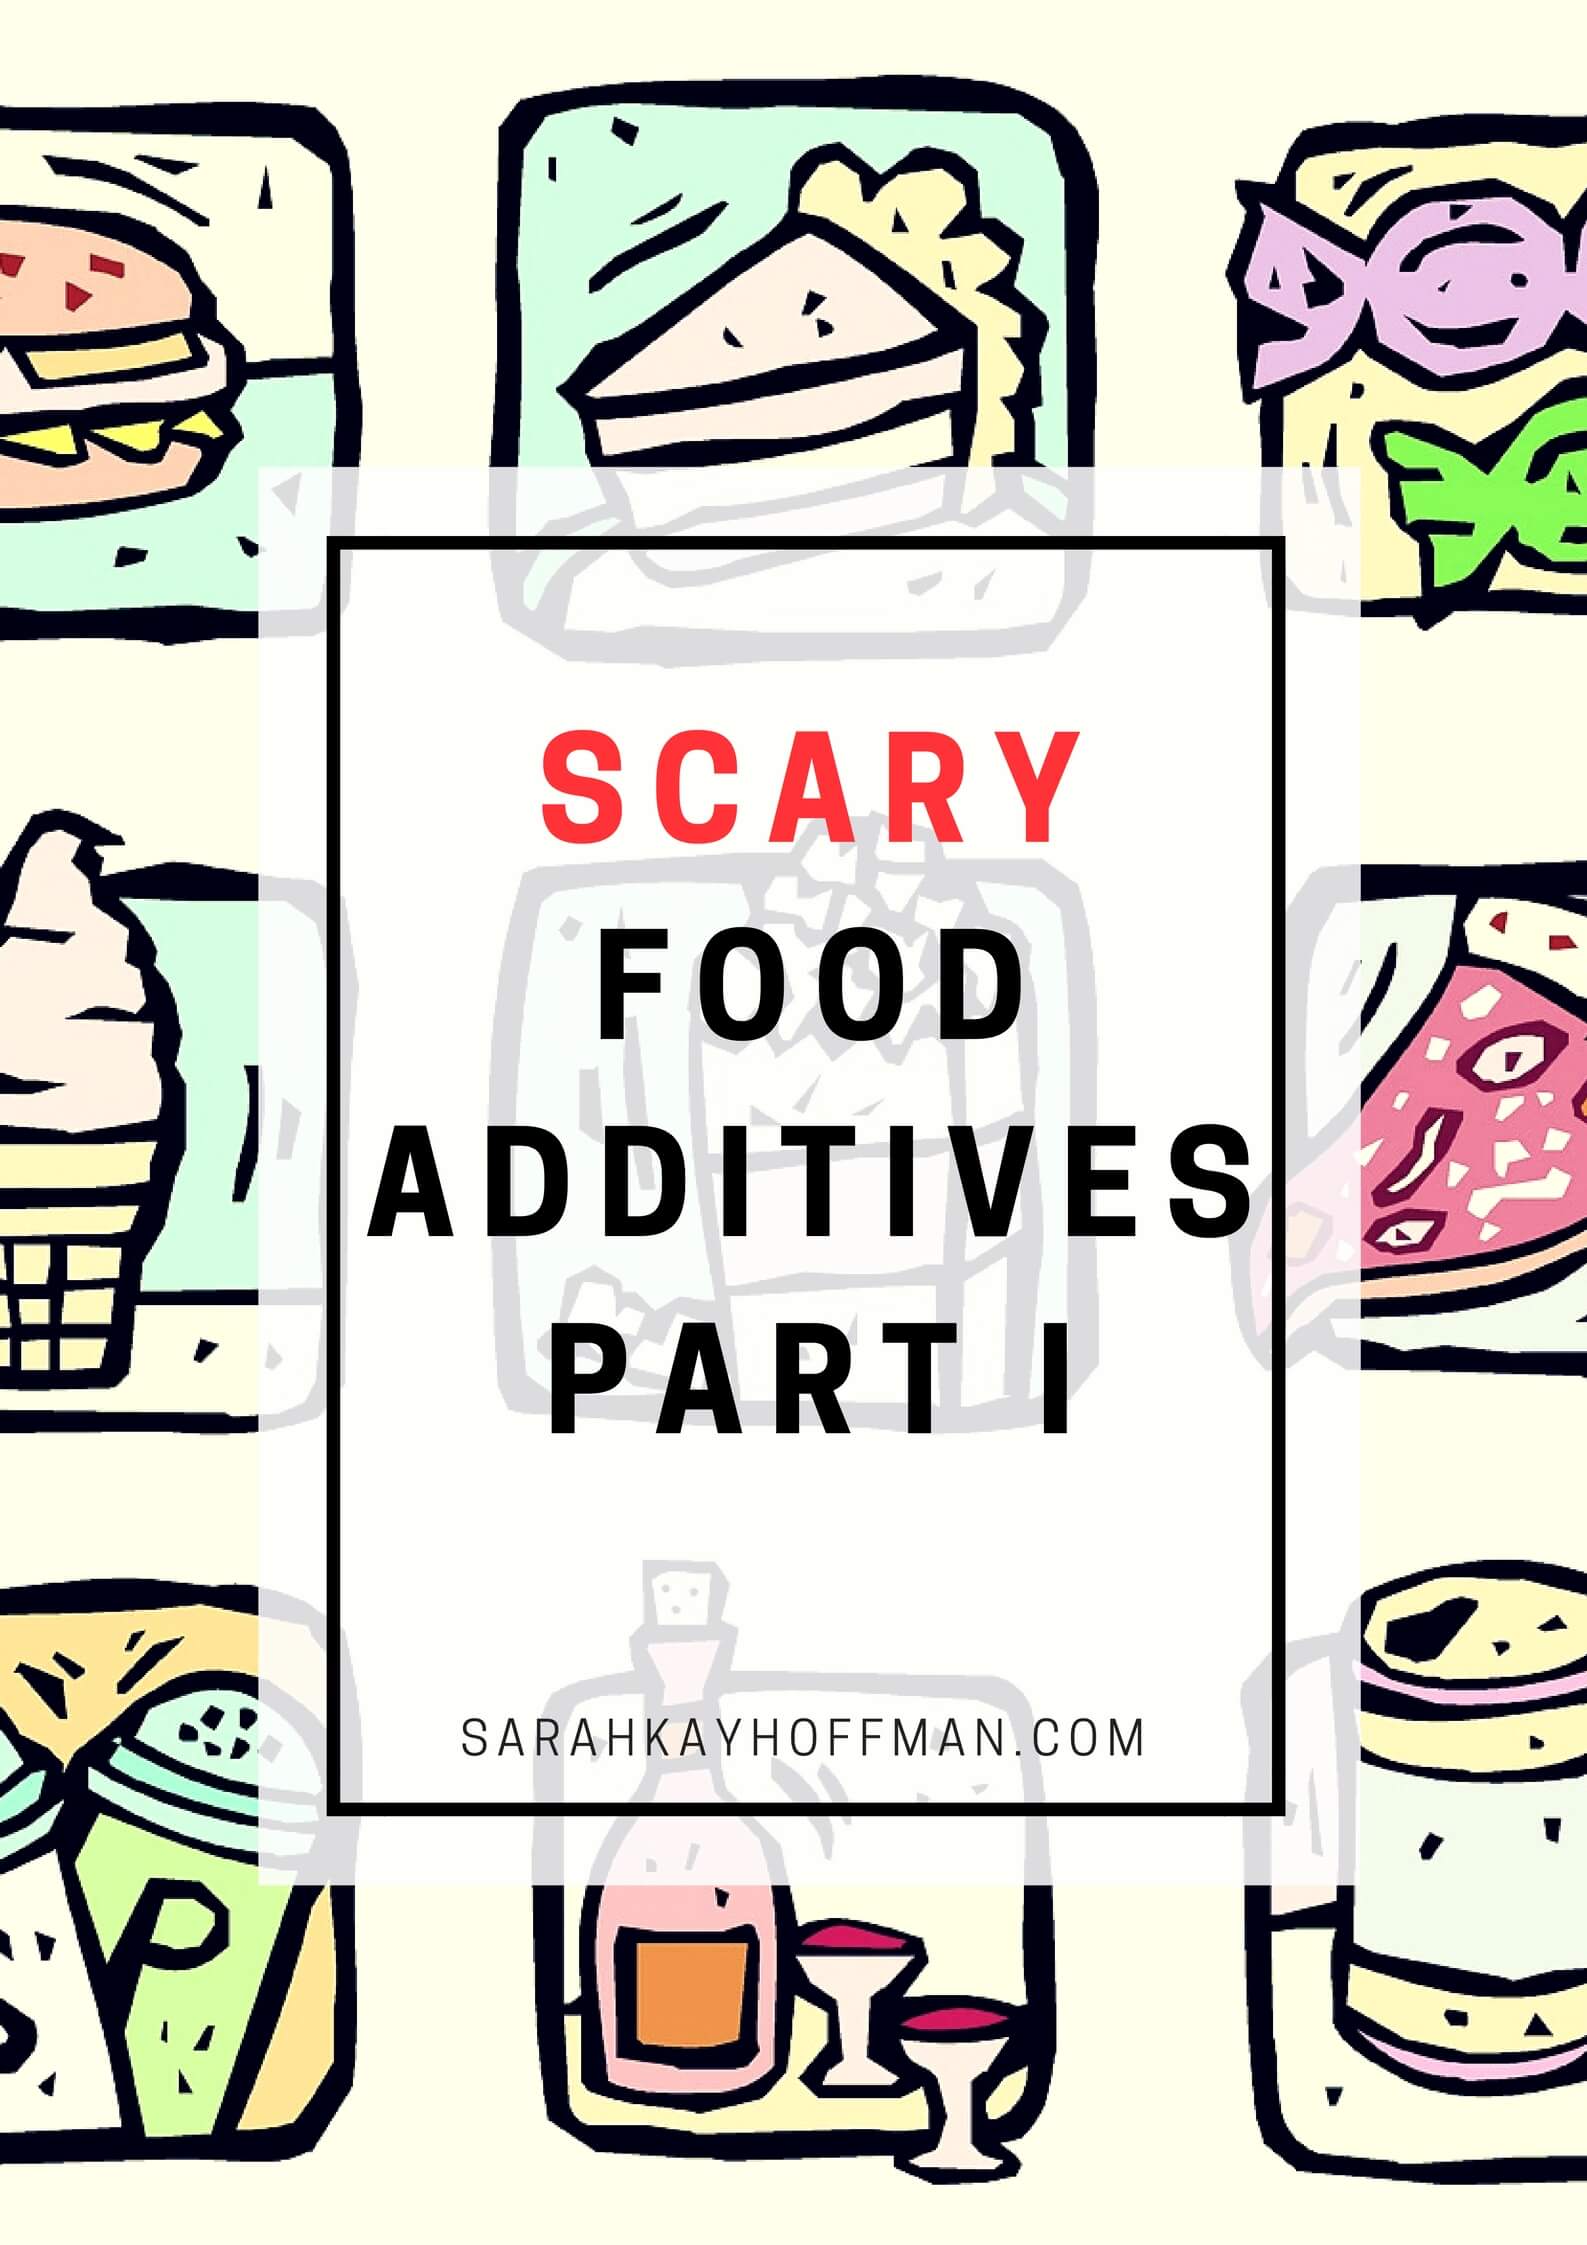 Scary Food Additives Part I sarahkayhoffman.com IBS IBD #healthyliving #guthealth #food #gmos